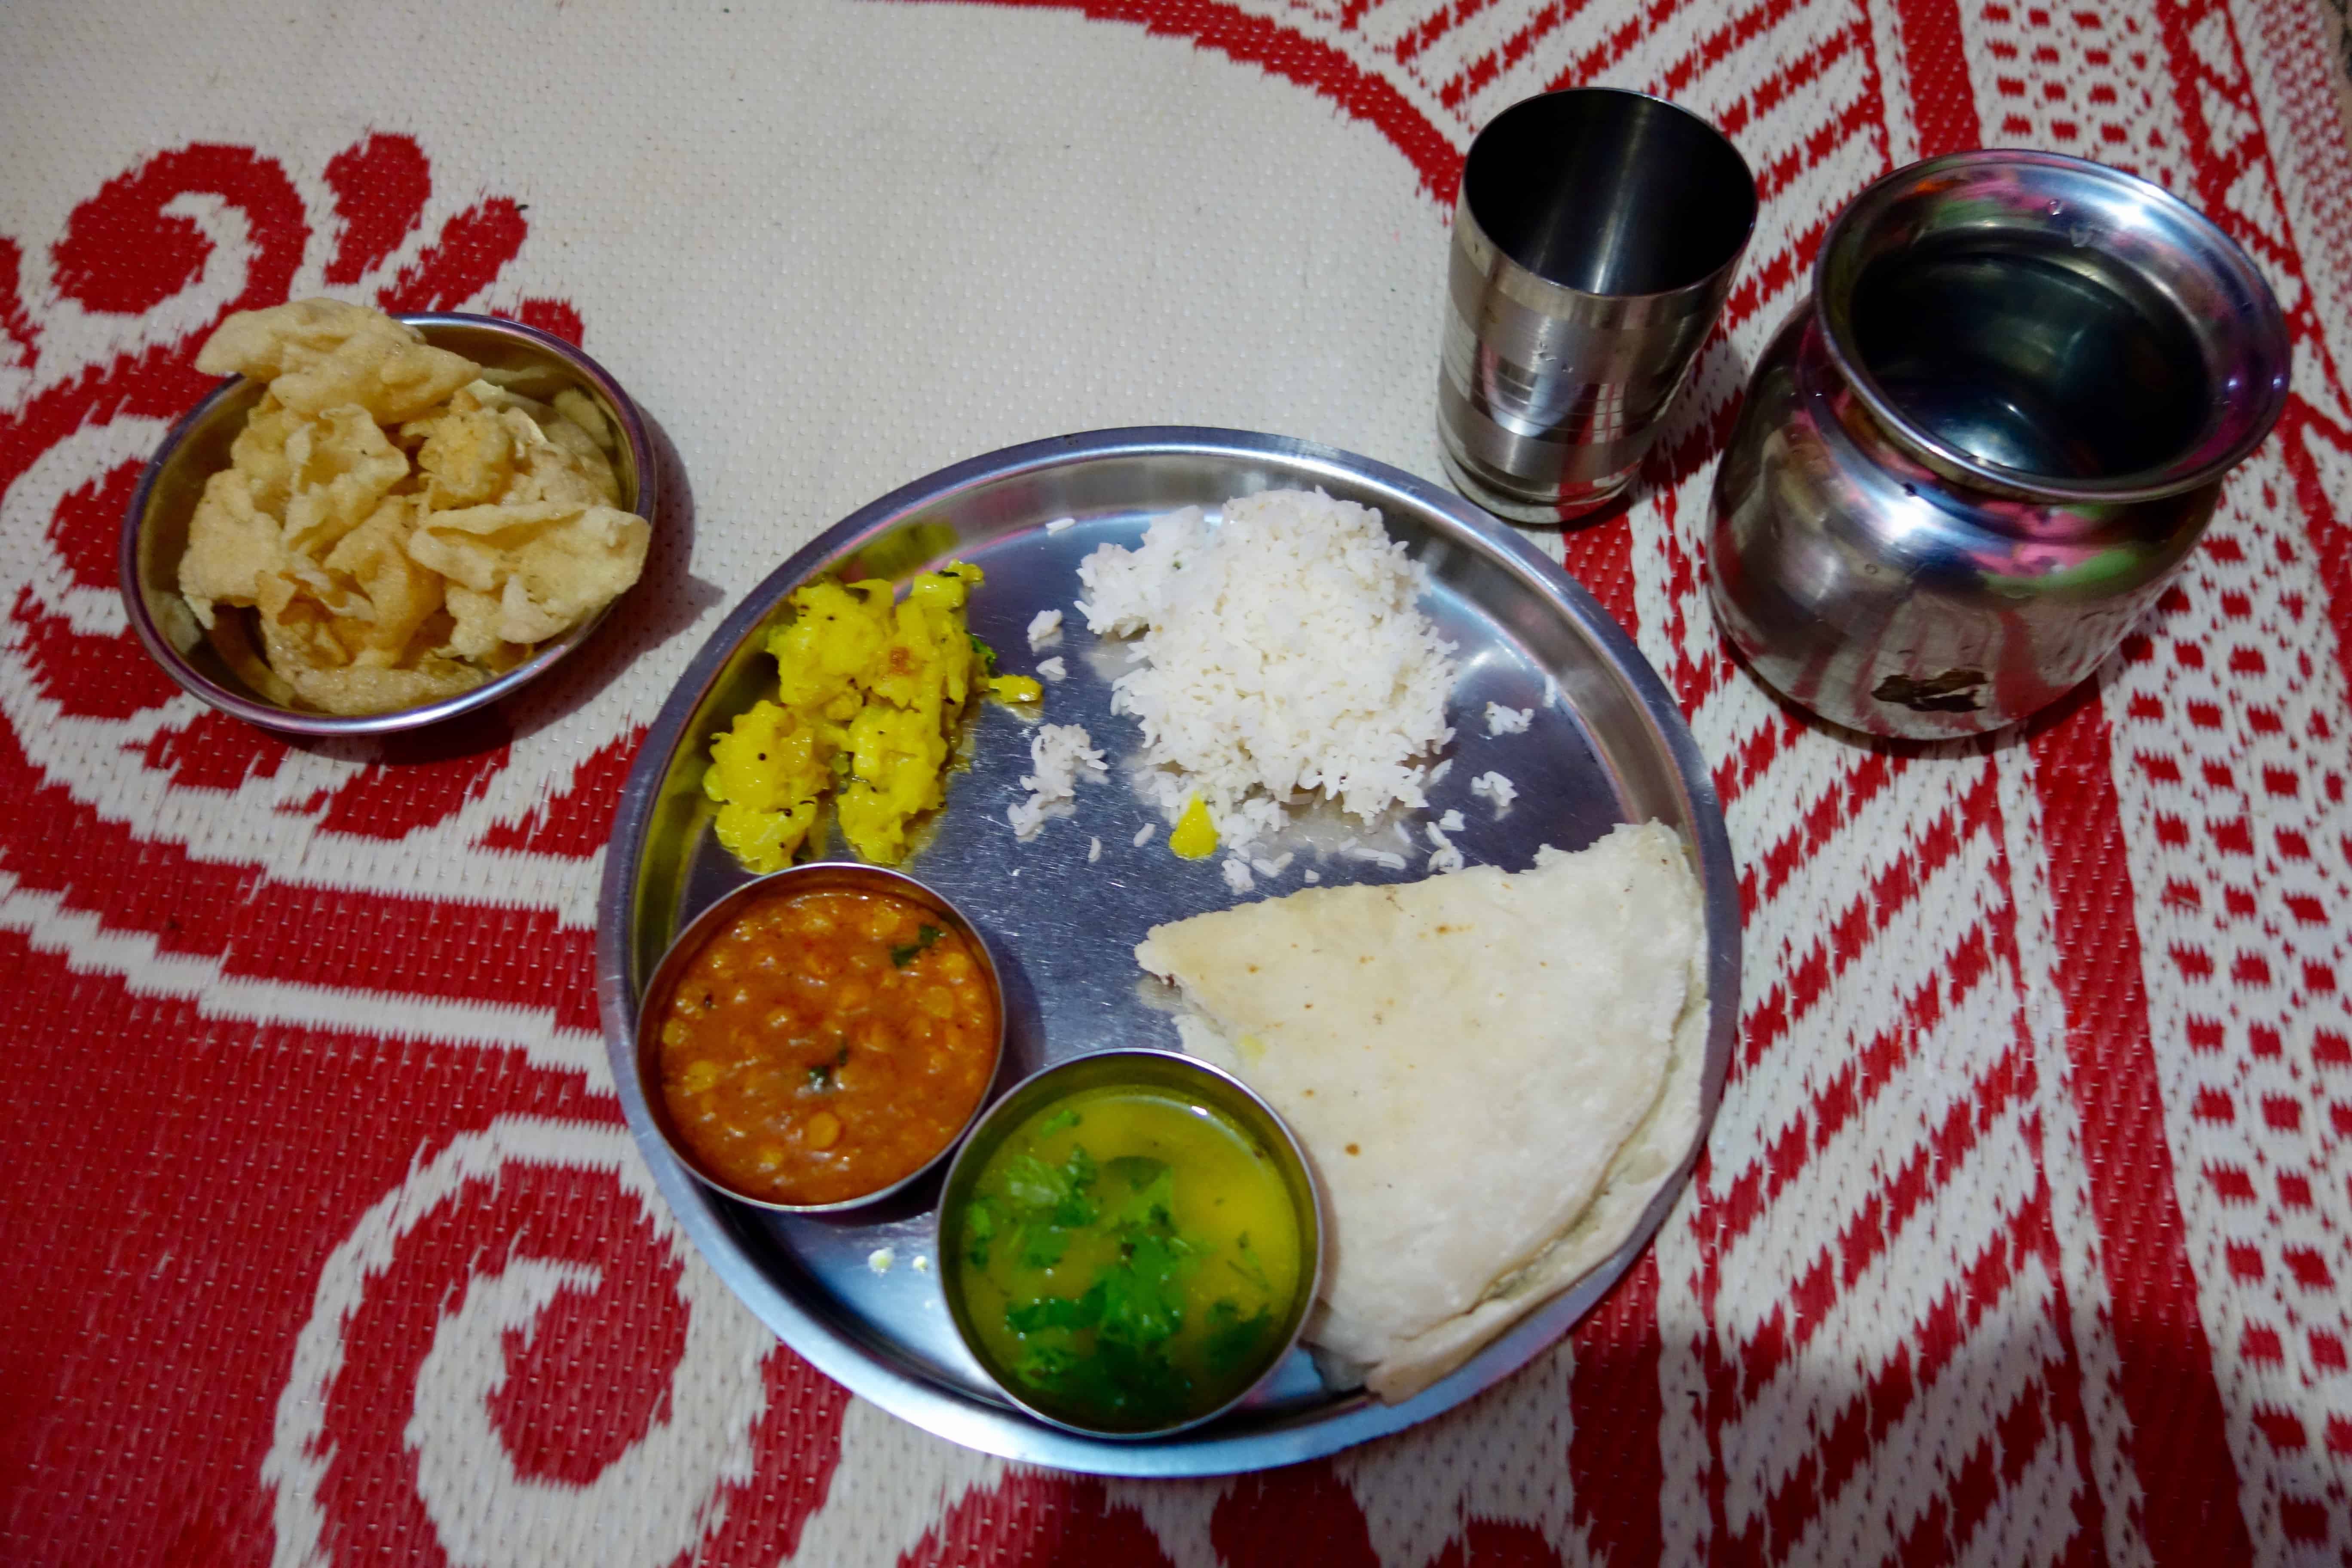 dehna food, responsible travel India, weekend getaways from mumbai, maharashtra food